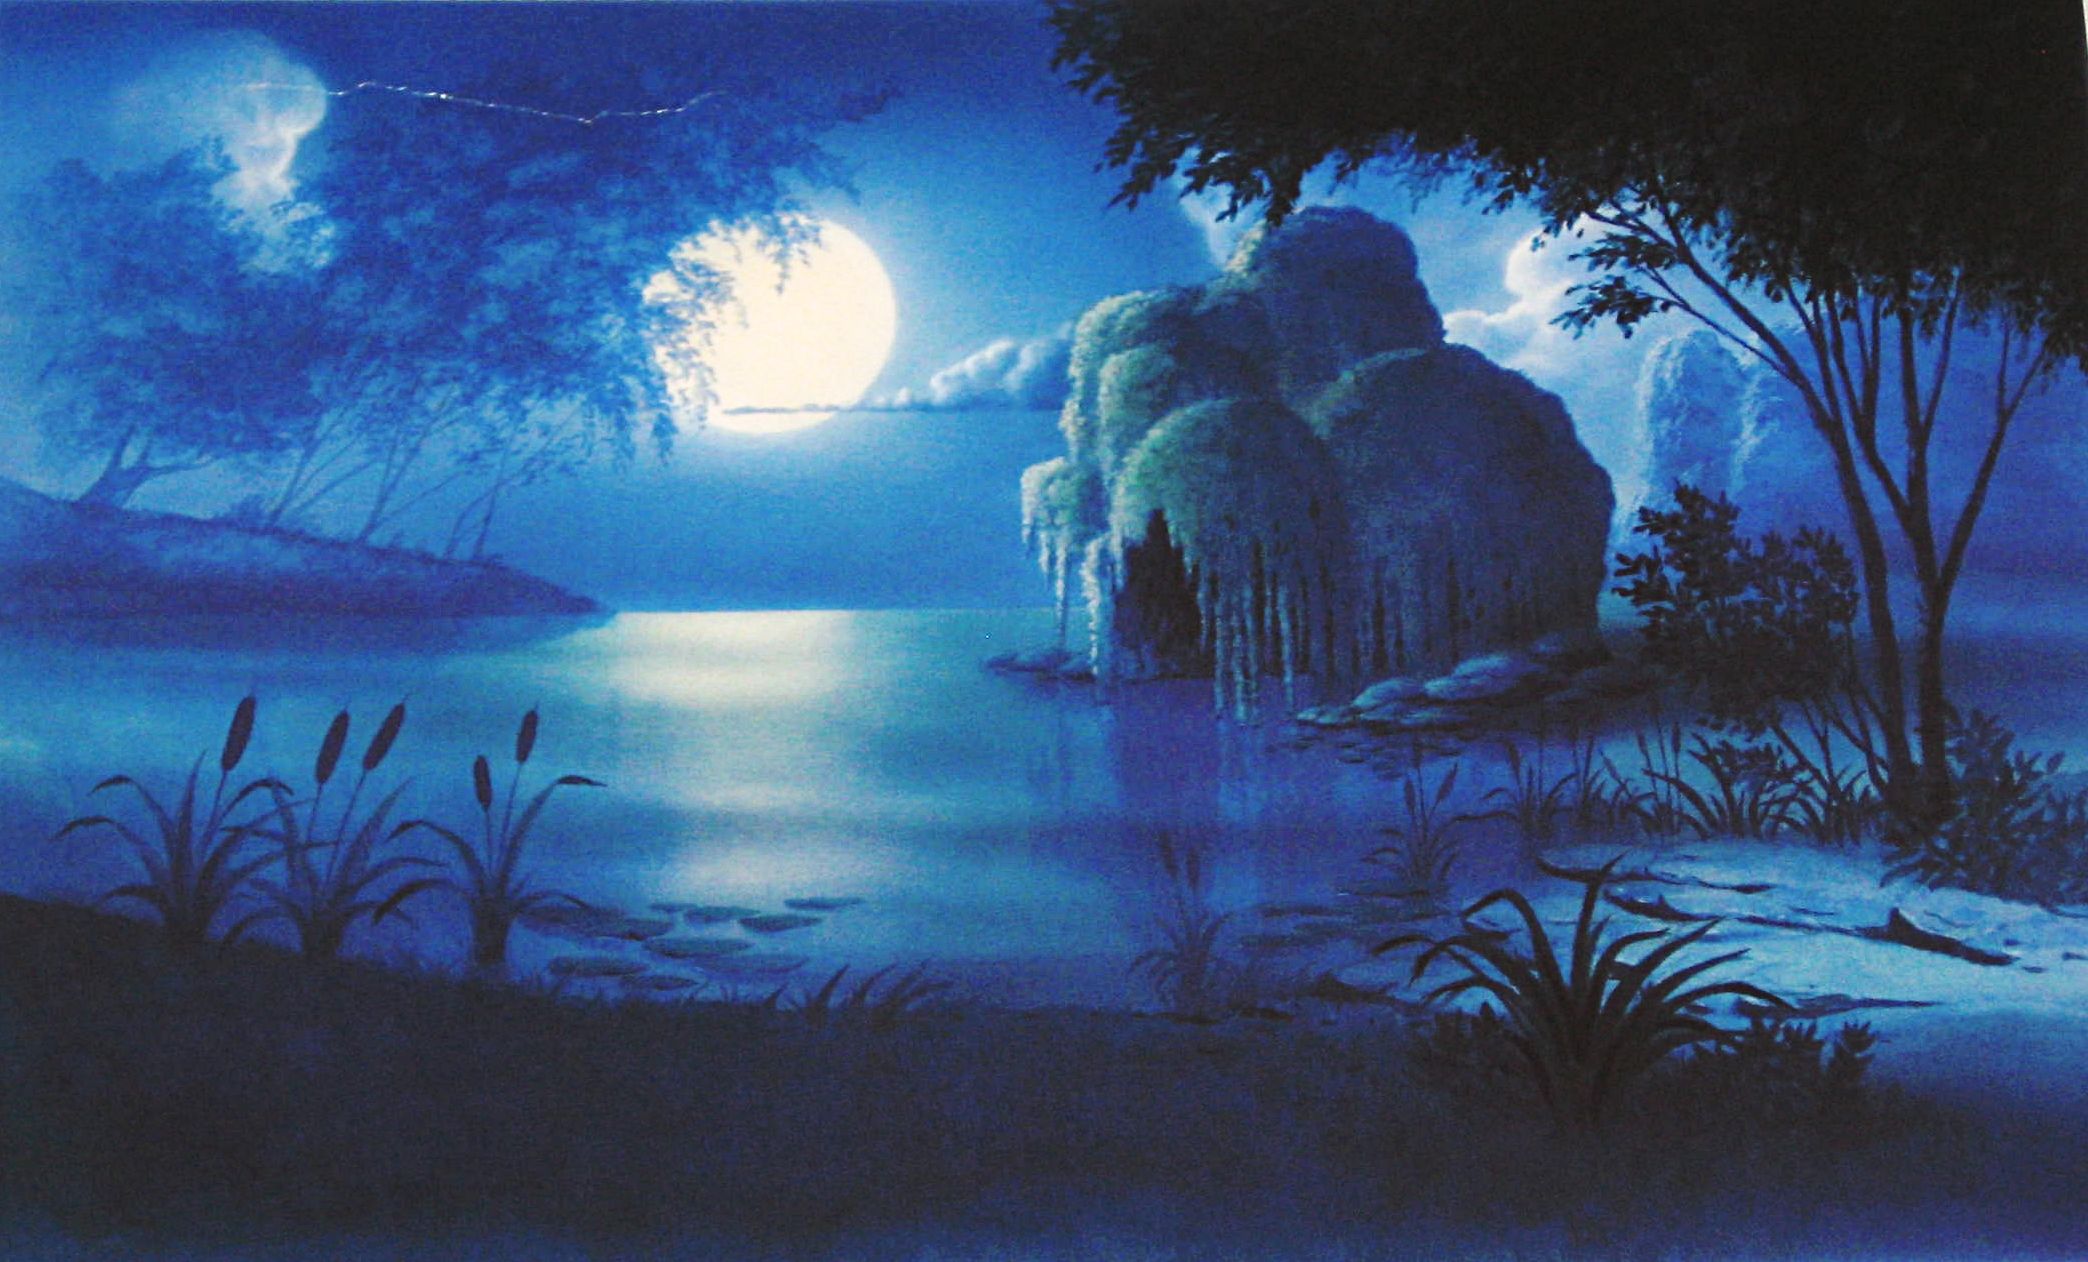 Disney Silhouette Wallpapers